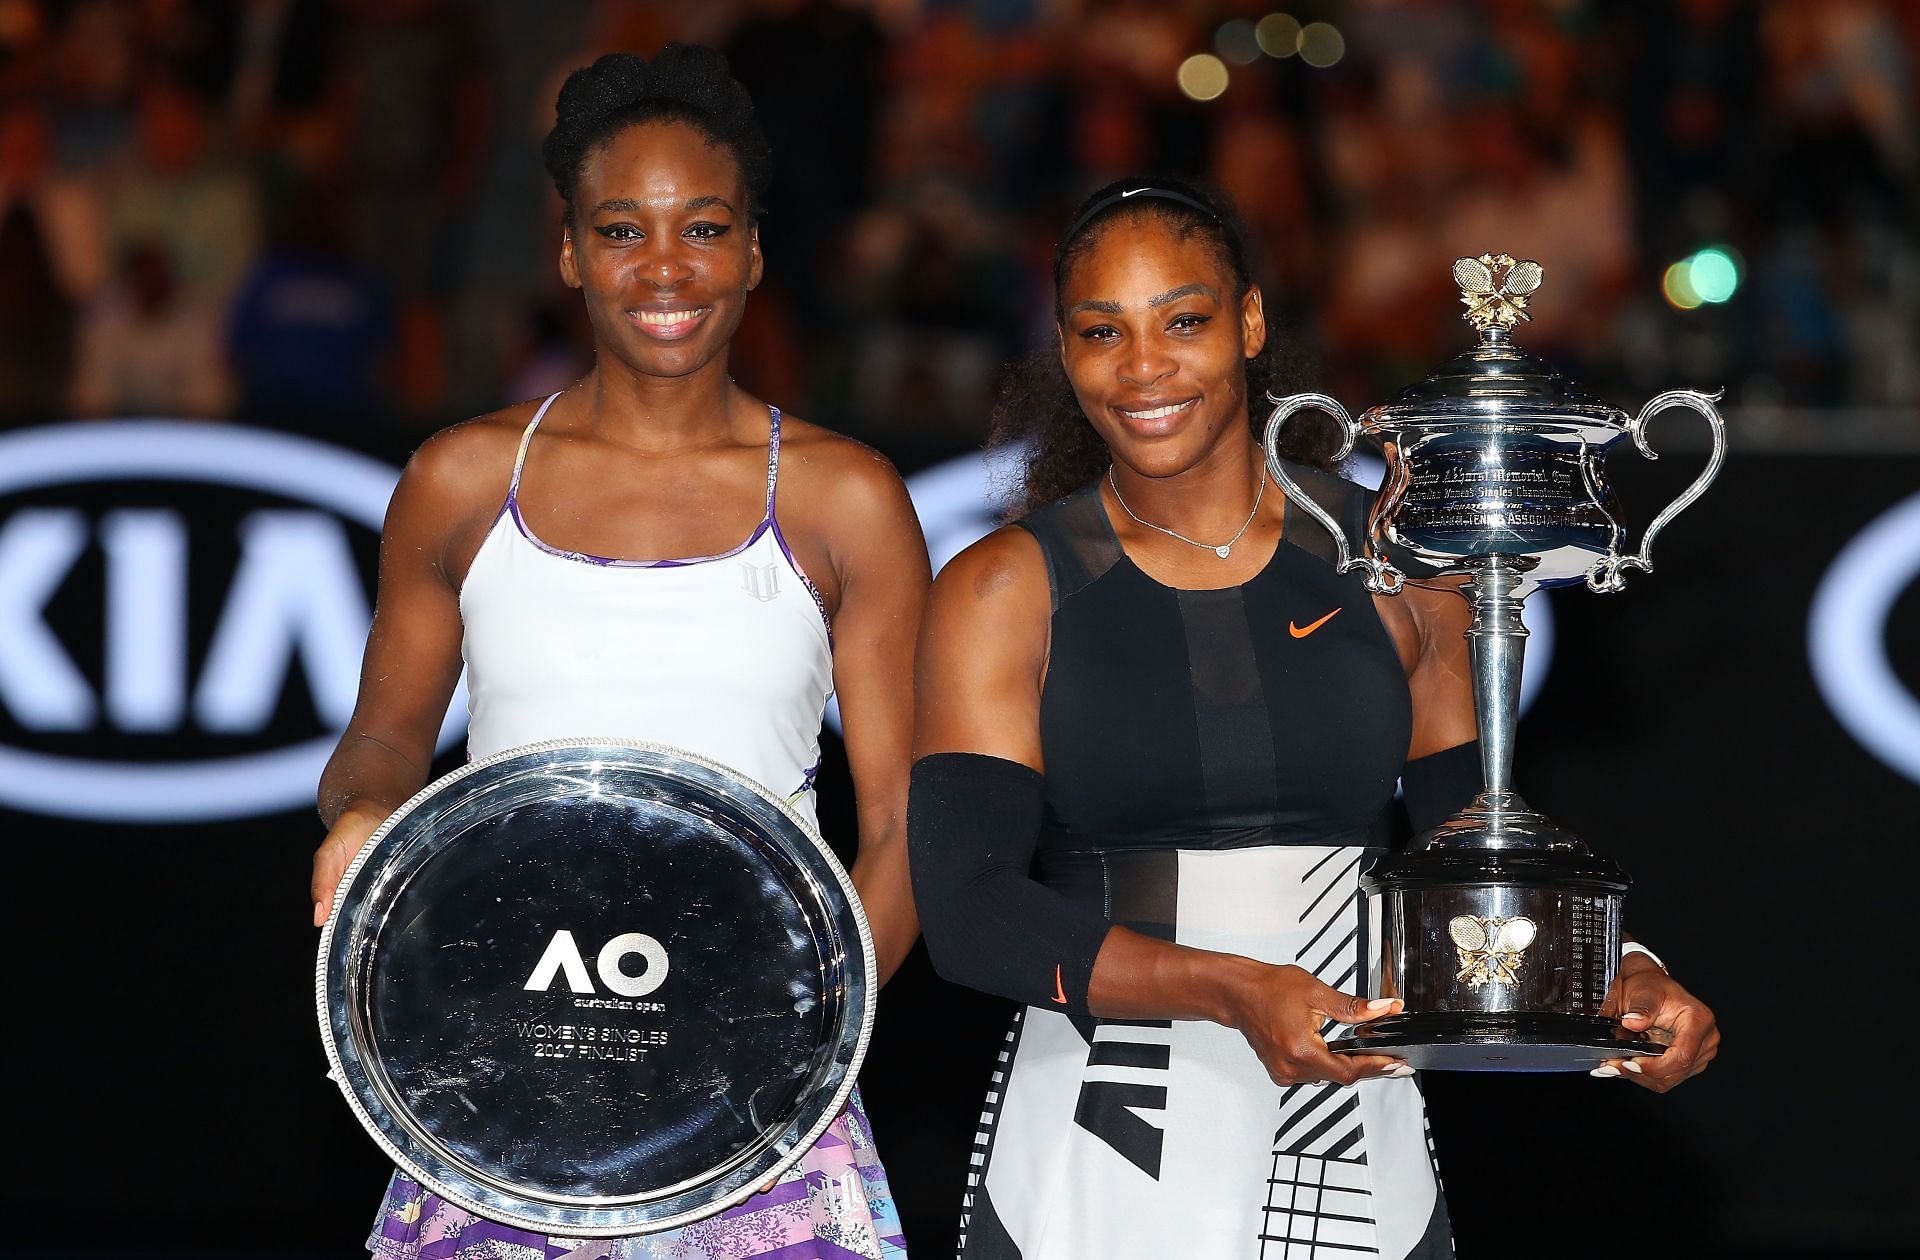 Venus Williams (L) and Serena Williams at the 2017 Australian Open